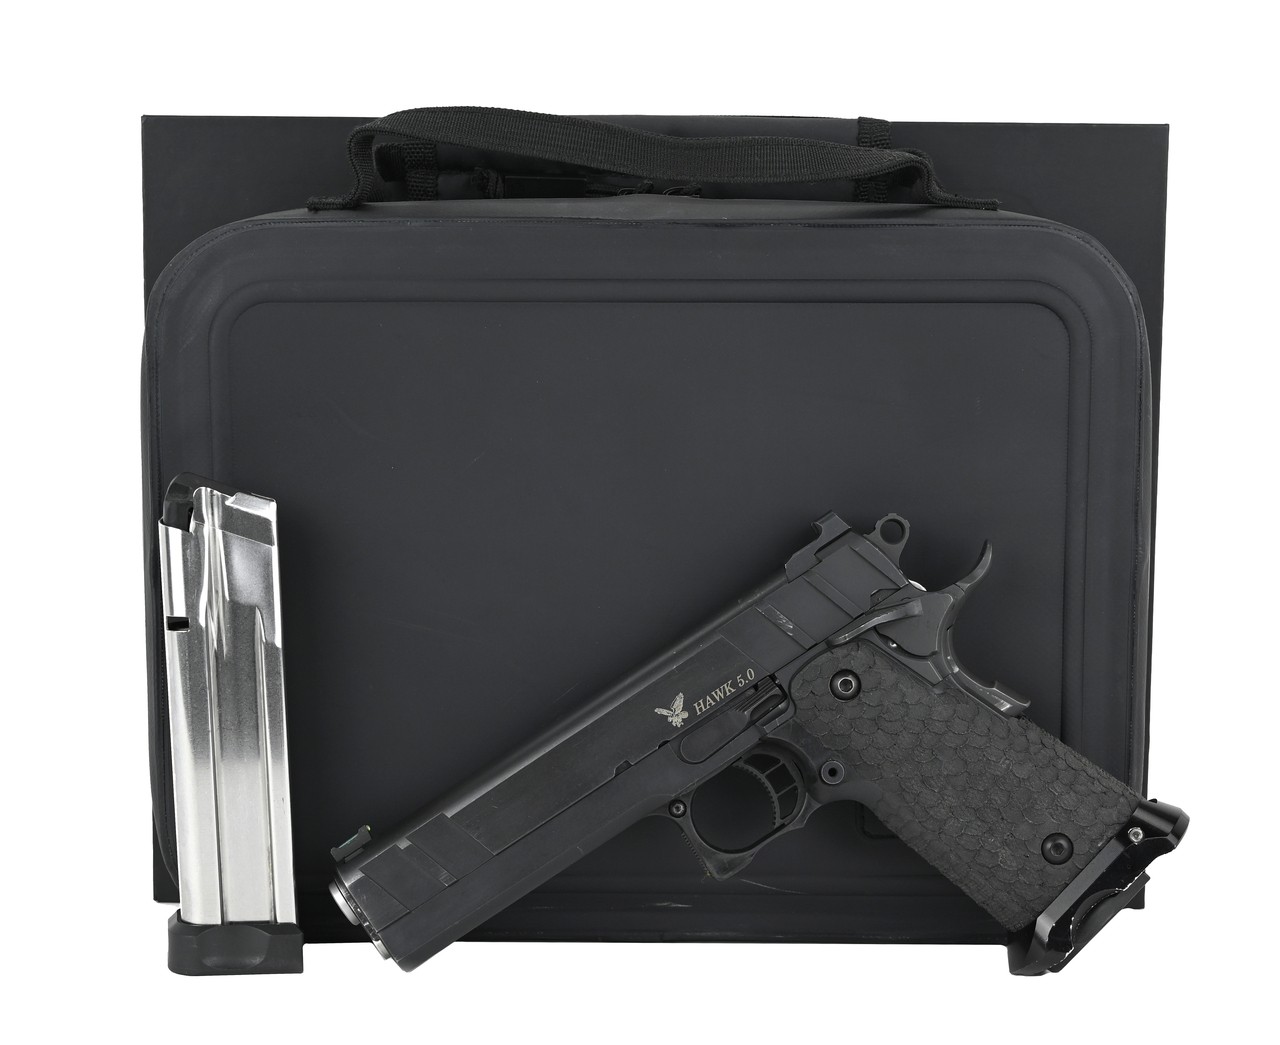 STI Hawk 5.0 9mm caliber pistol for sale.